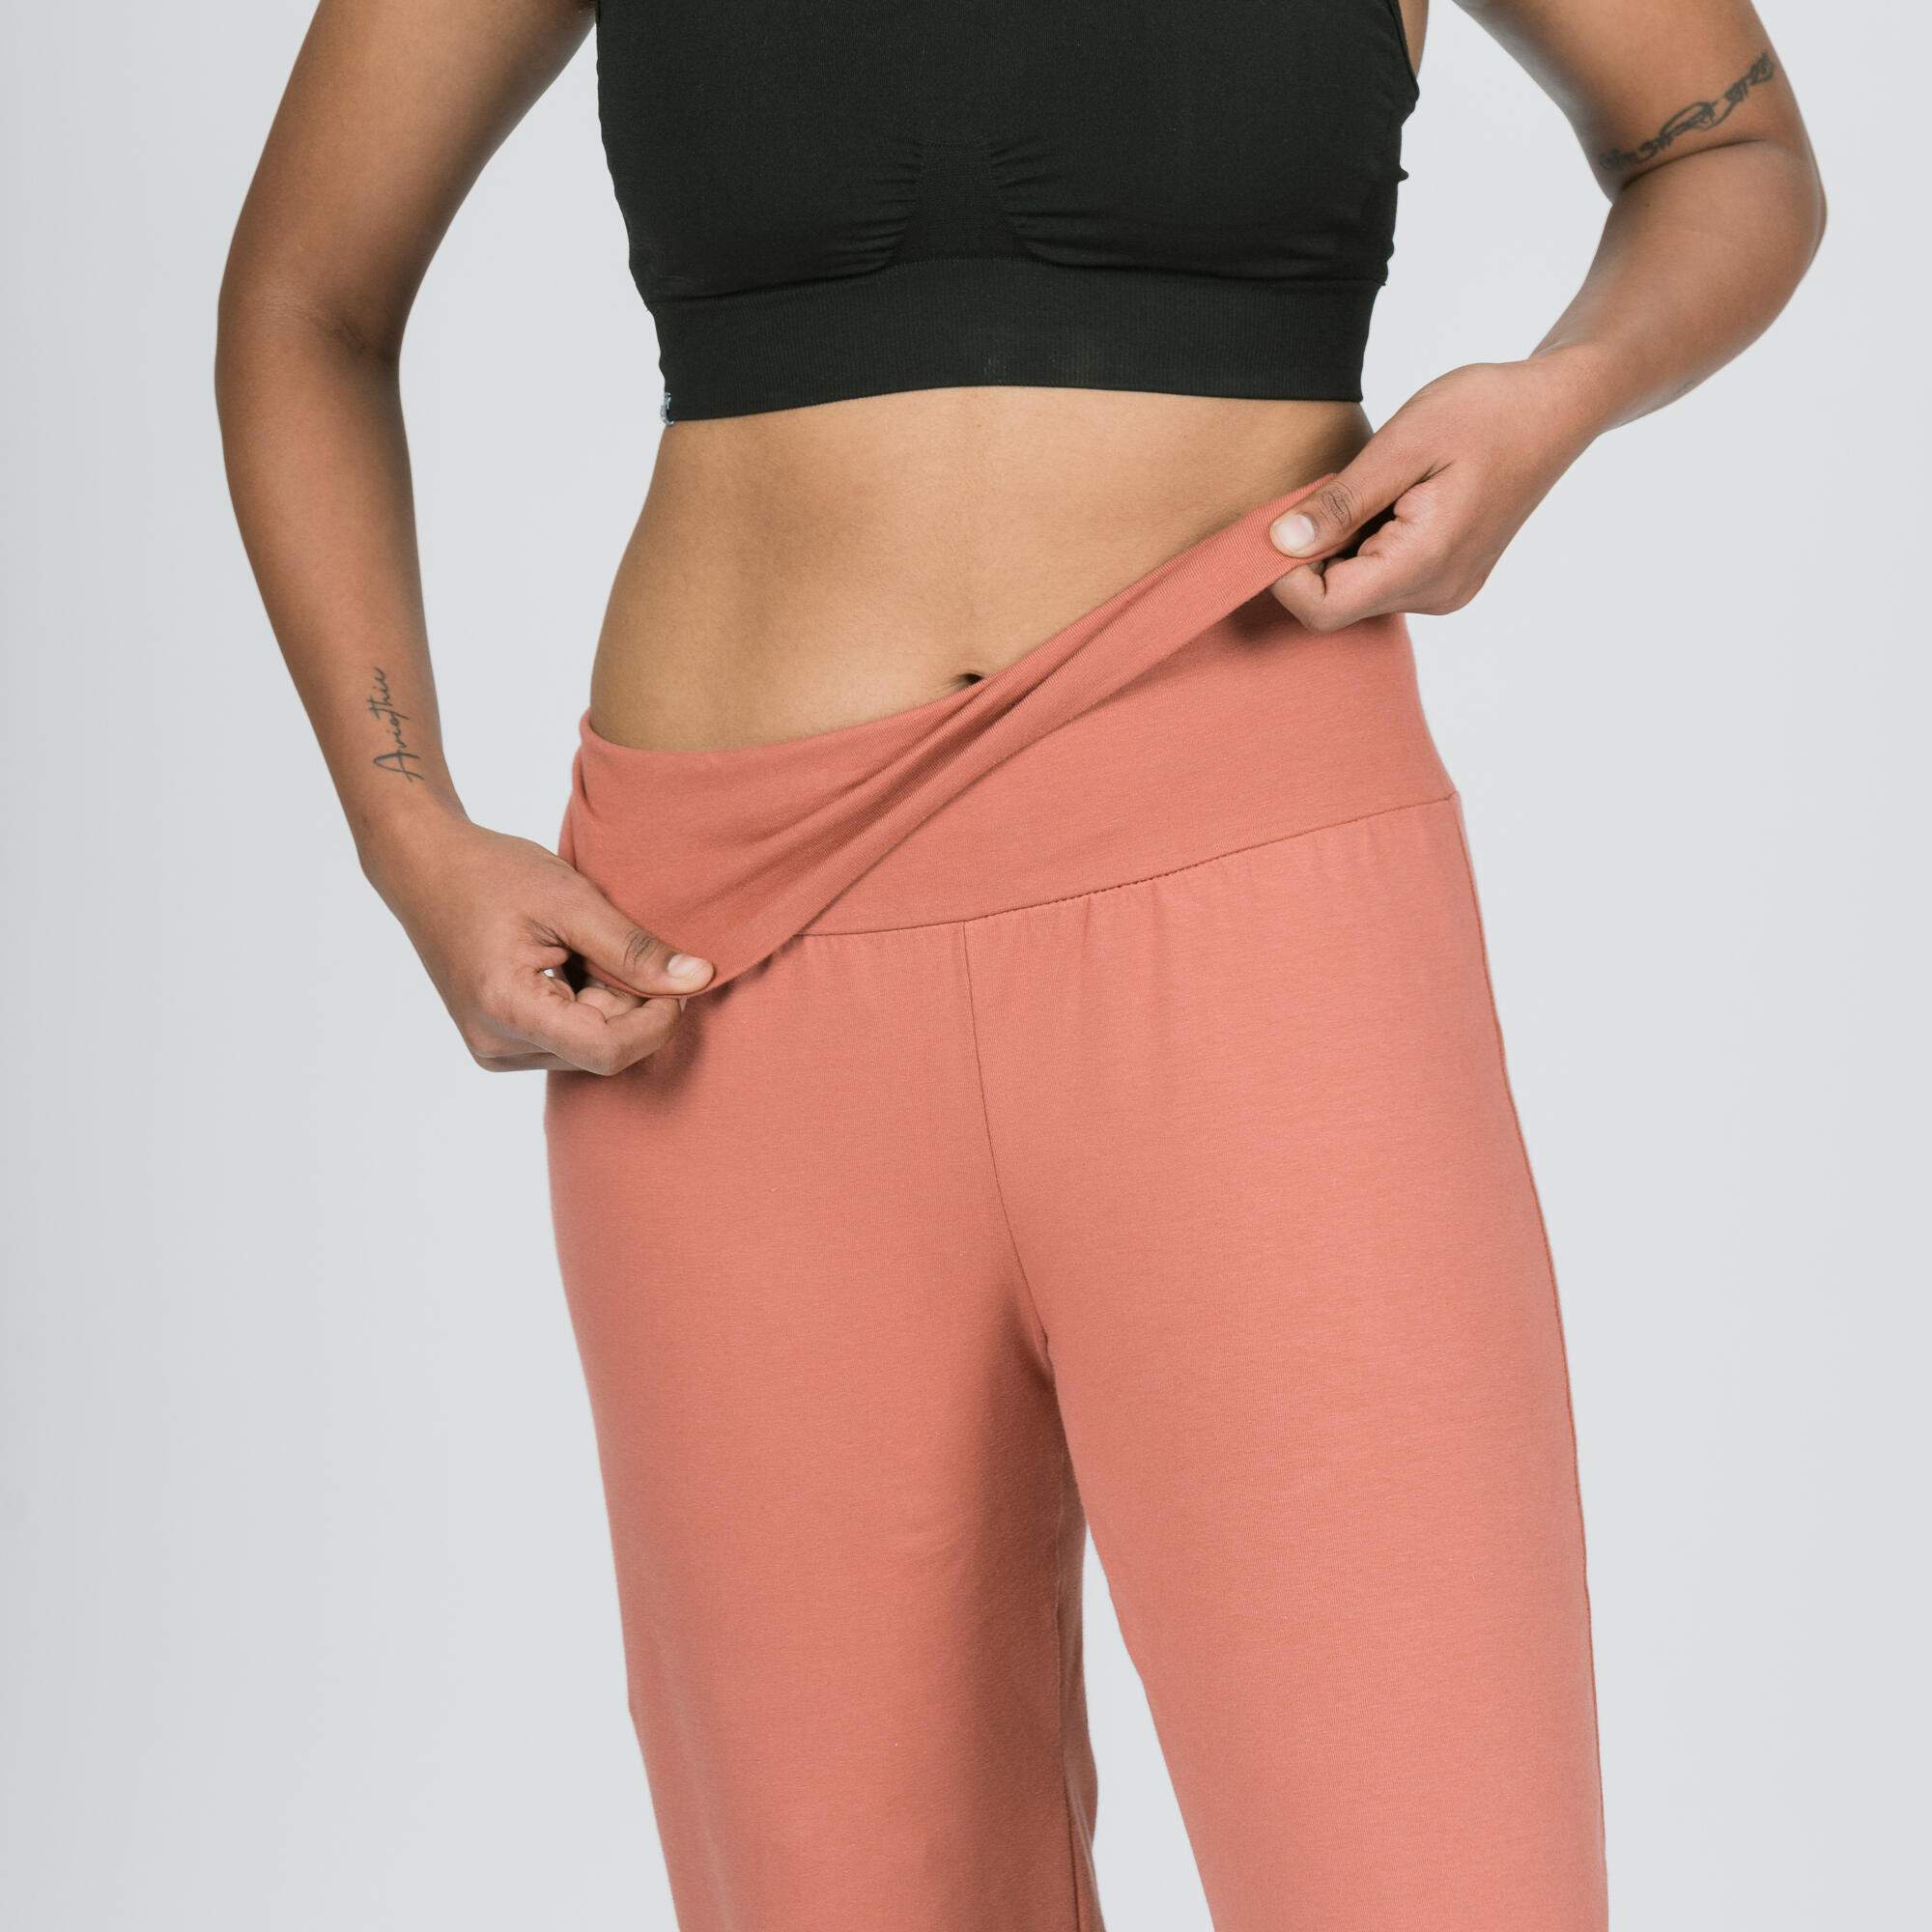 Buy Yoga Pants For Women Online  Decathlon